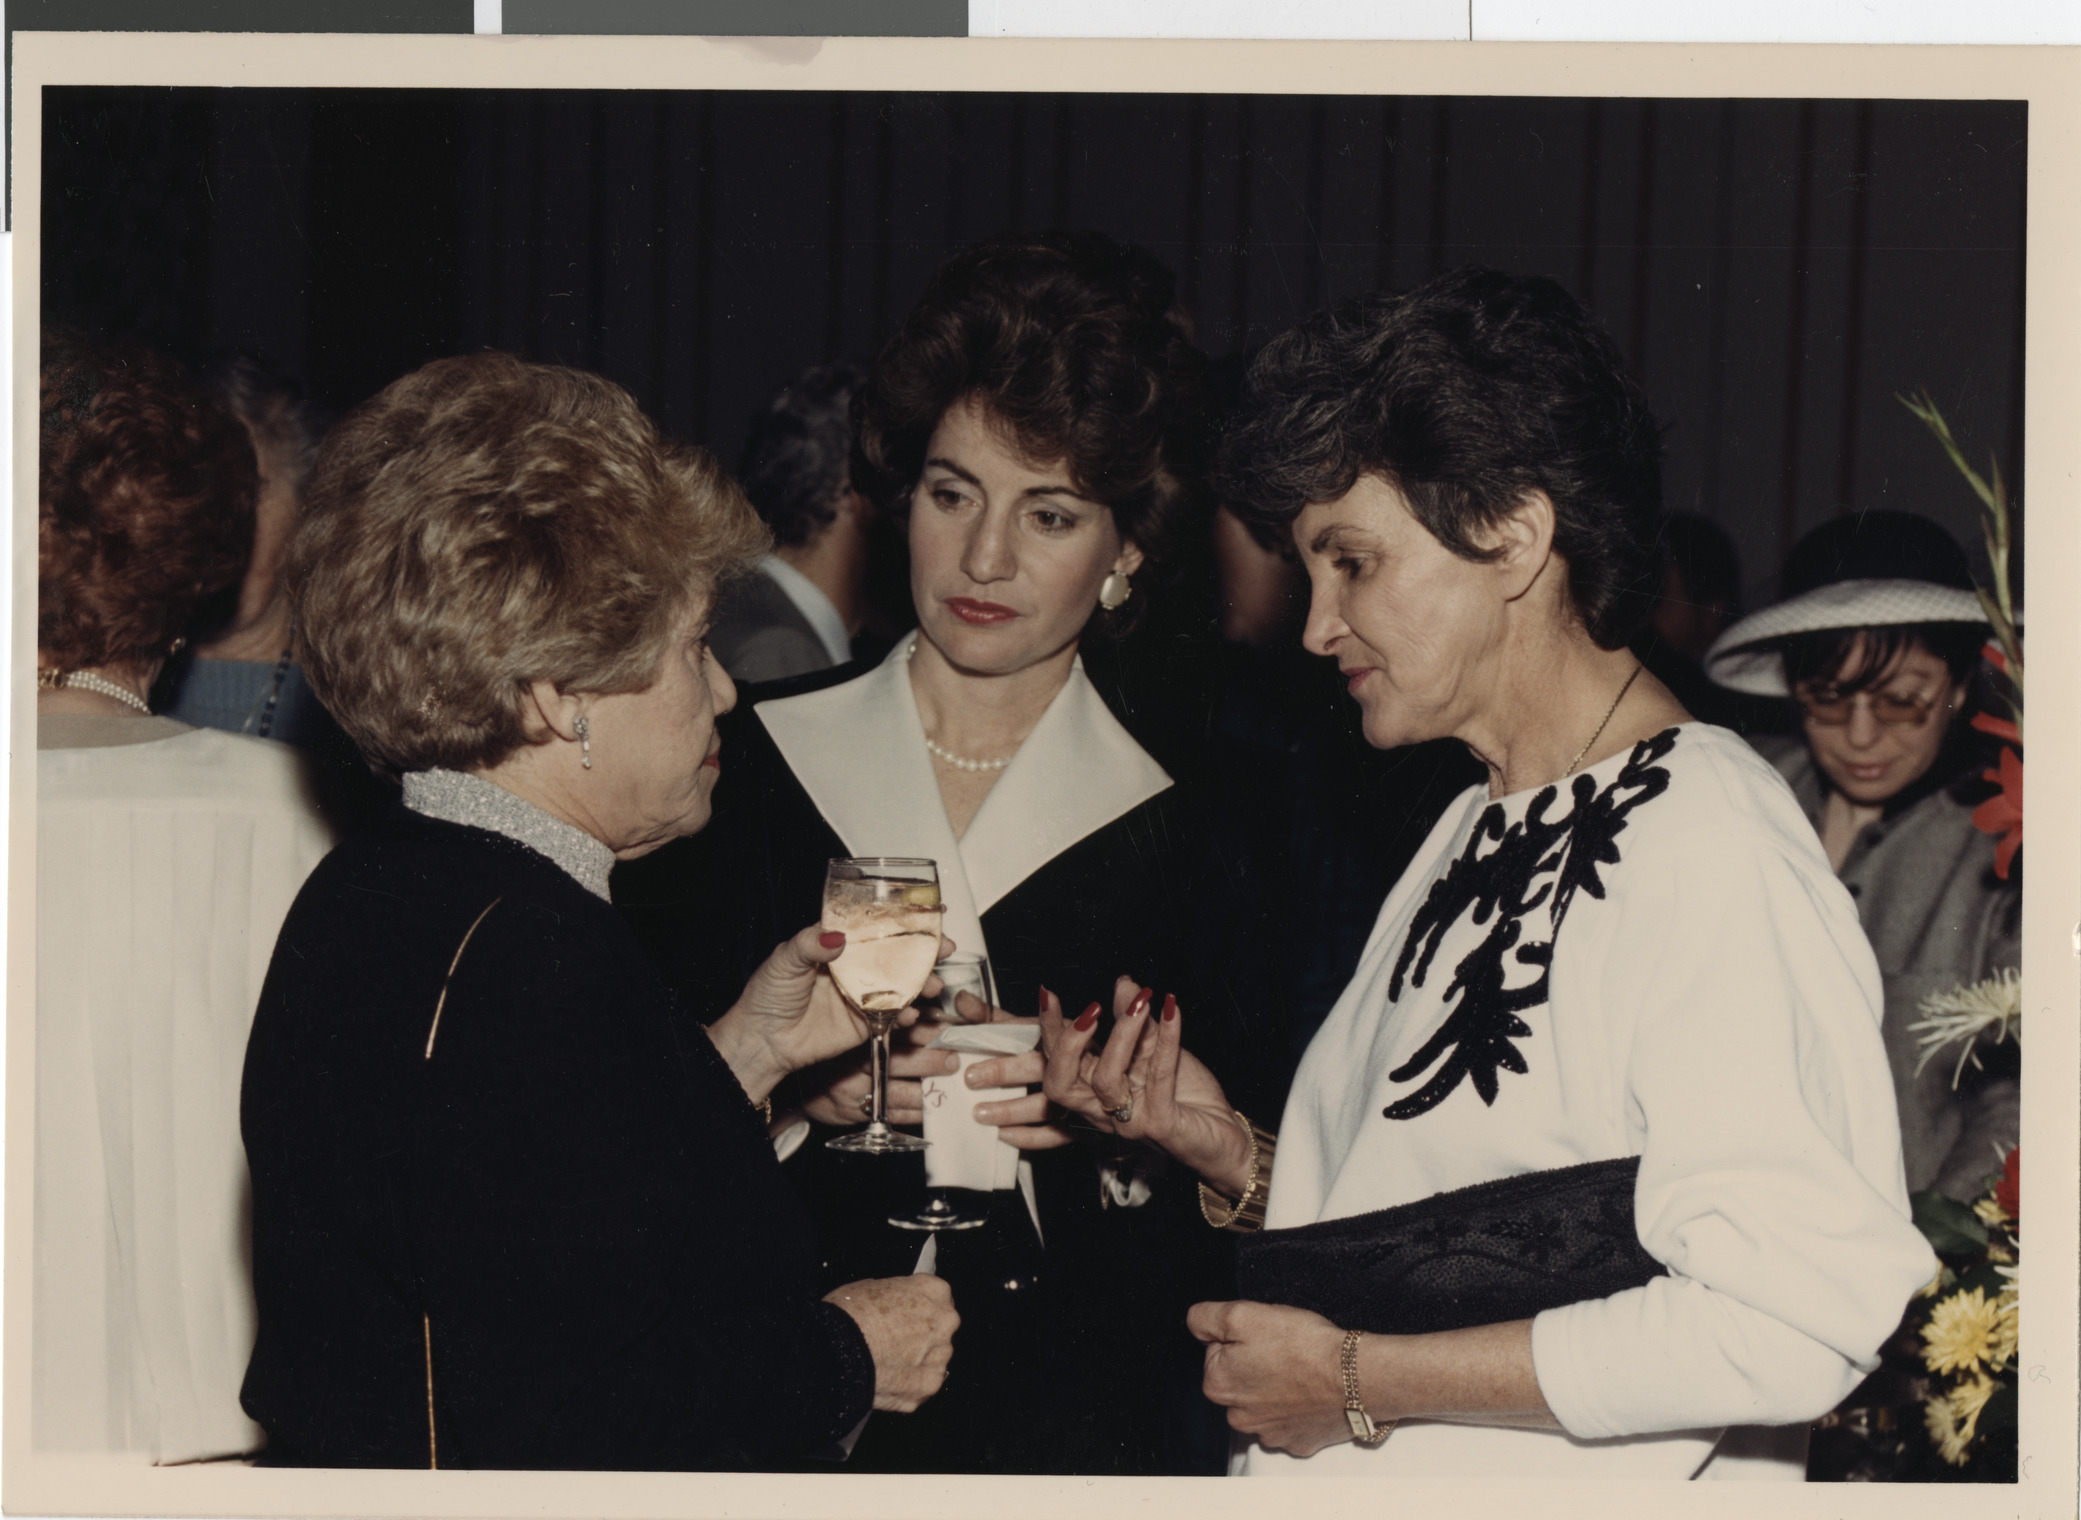 Photograph of Edythe Katz, Roberta Sabbath and Dee Ober at an event, date unknown